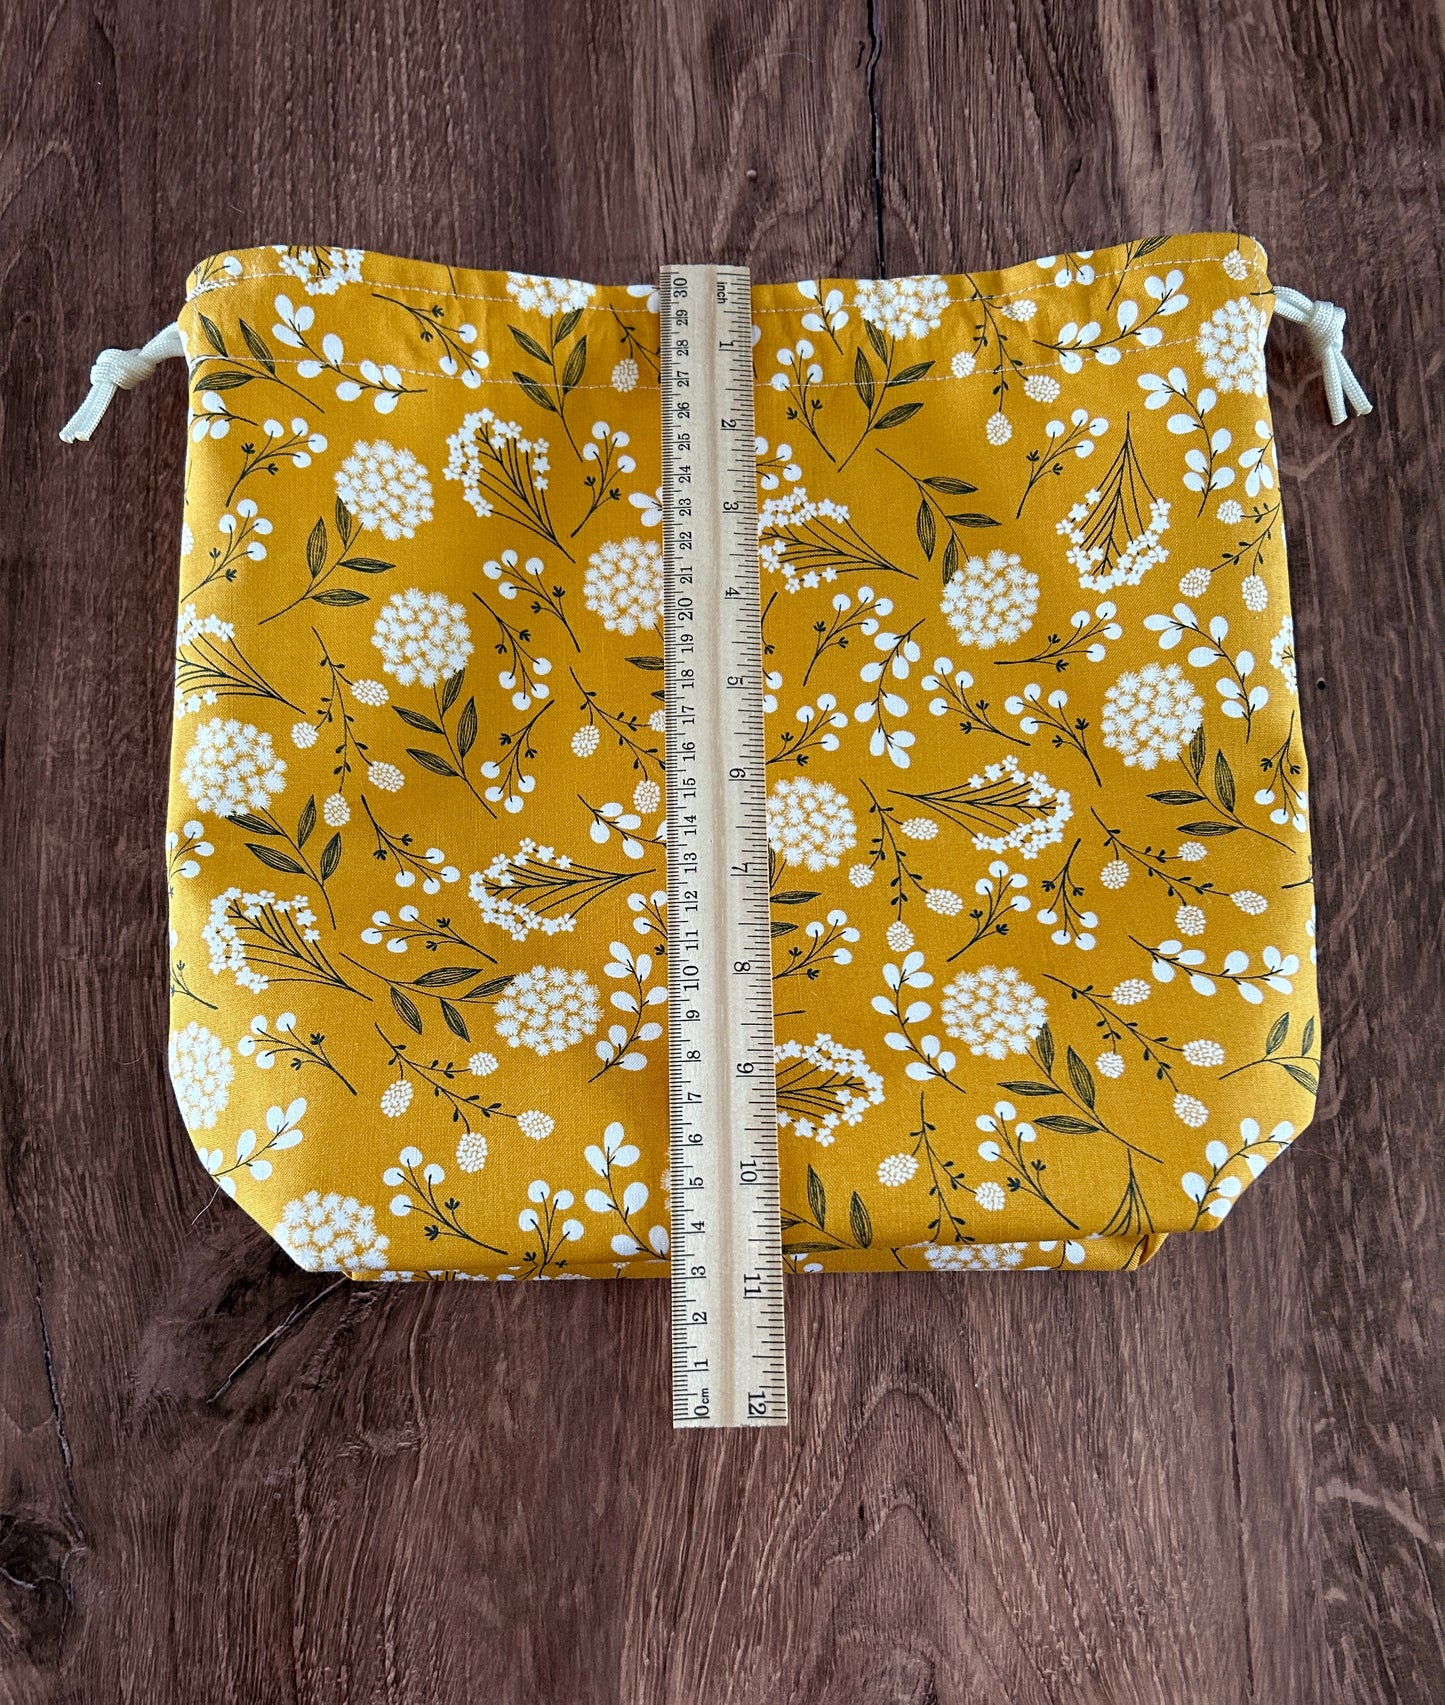 Copy of Flower Project Bag - Handmade - Drawstring Bag – Knitting Bag – Crochet Bag - Toy Sack - Floral